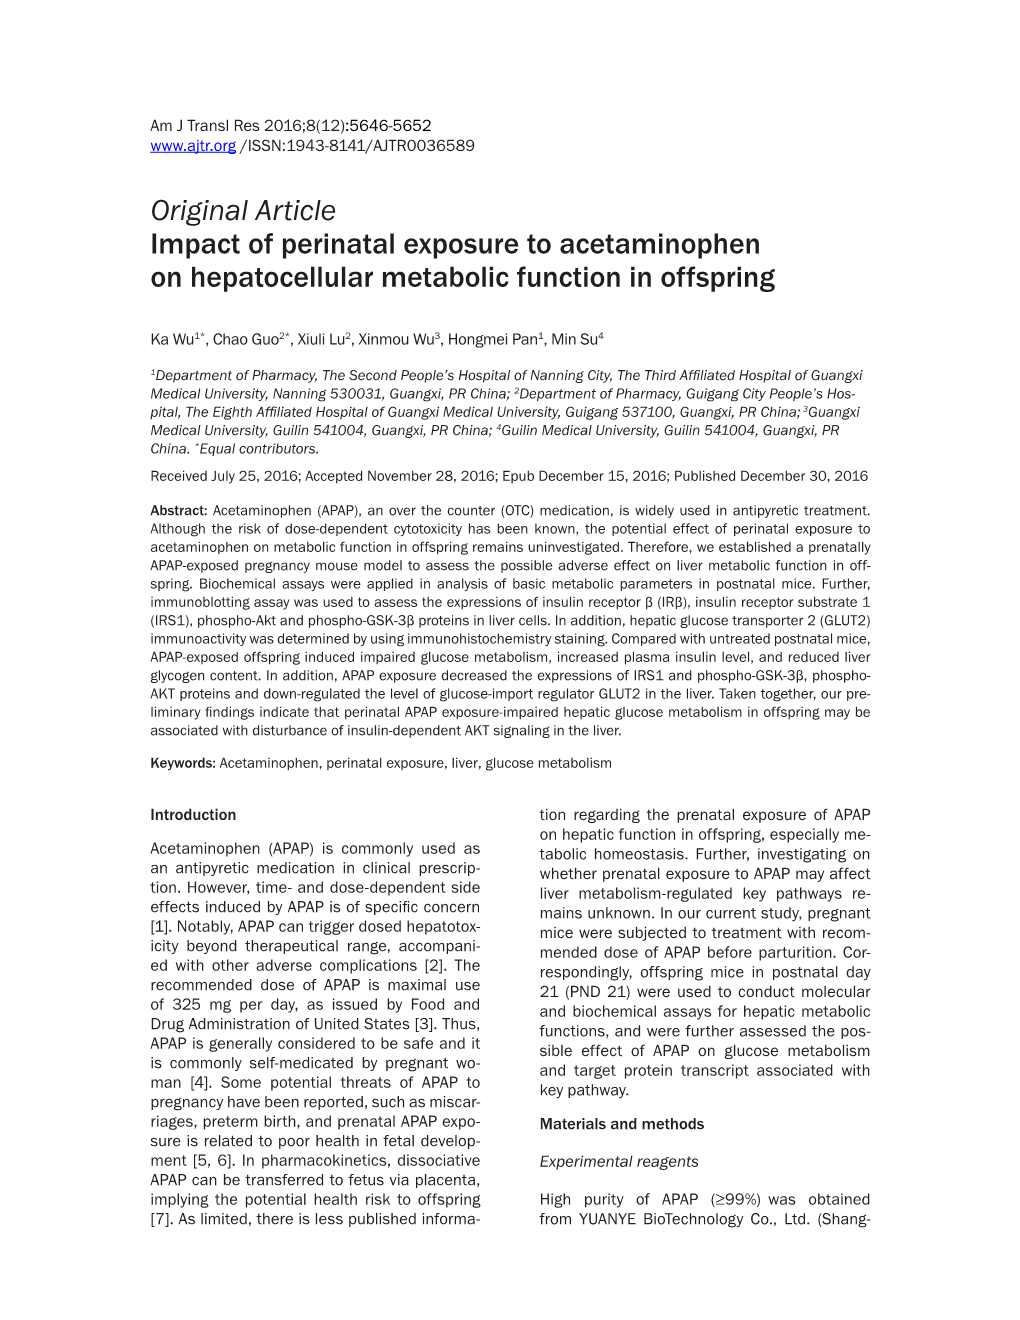 Original Article Impact of Perinatal Exposure to Acetaminophen on Hepatocellular Metabolic Function in Offspring